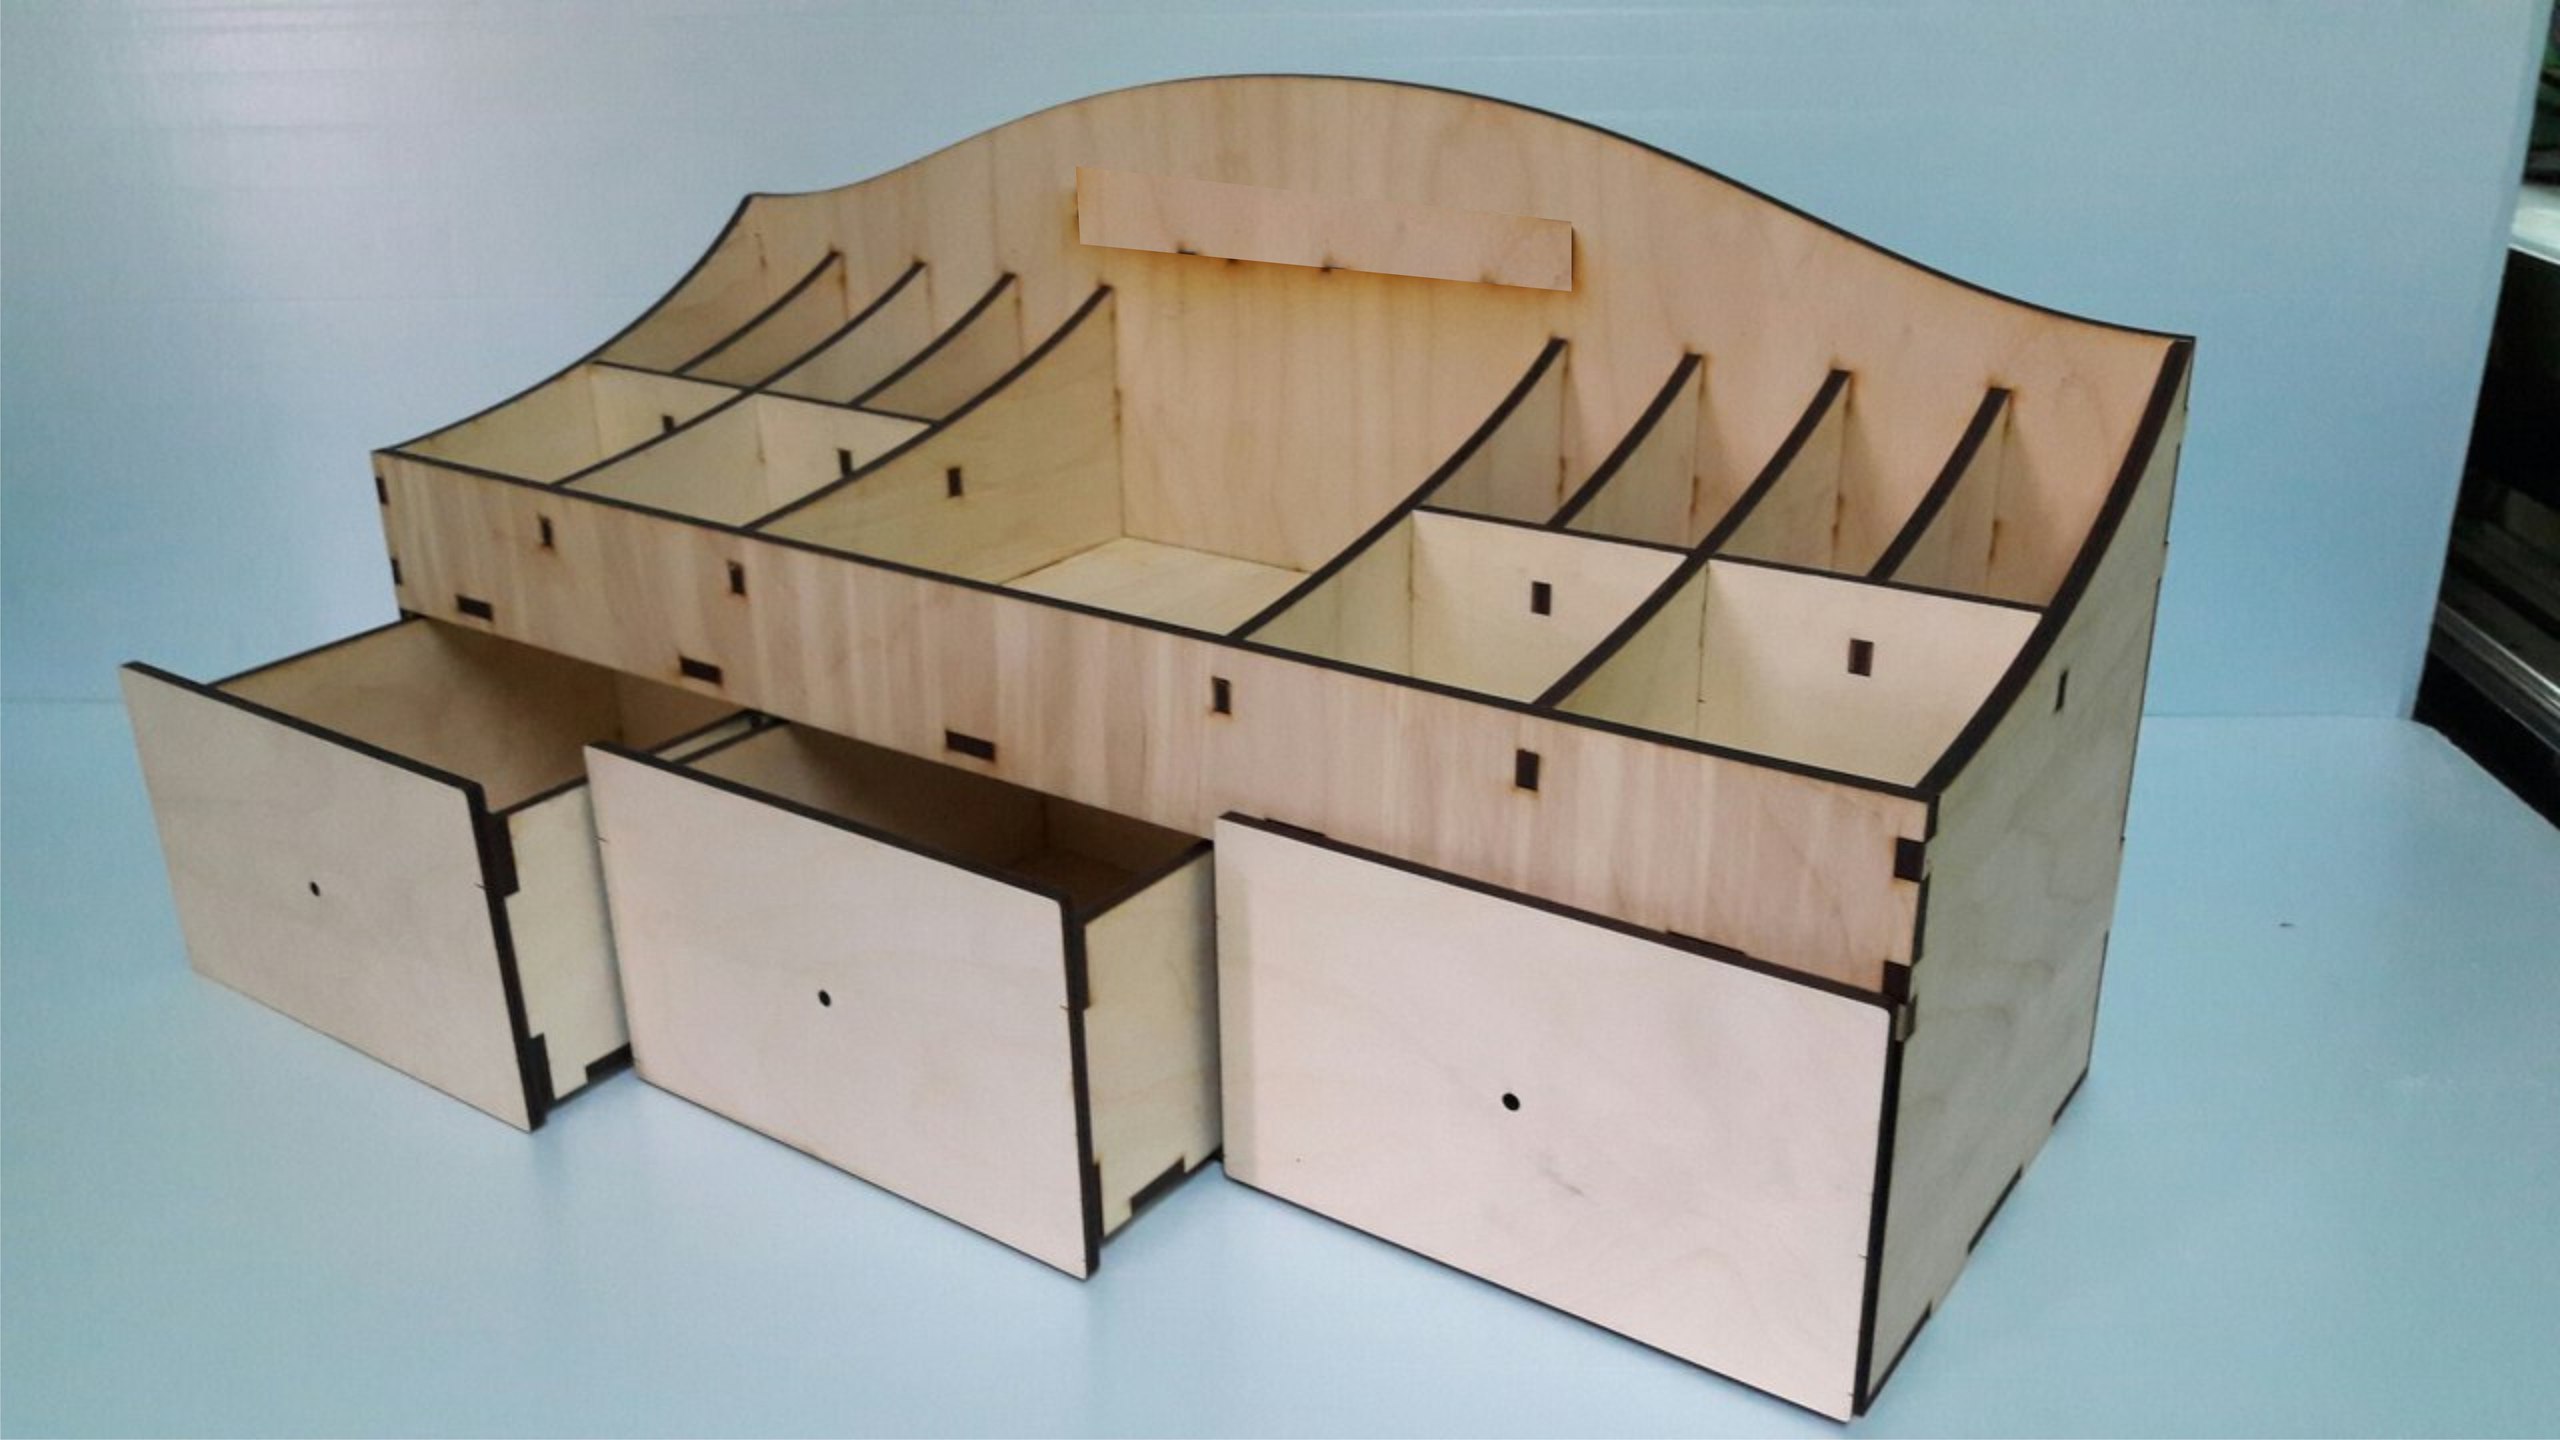 Large Wooden Desk Organizer Free CDR Vectors Art